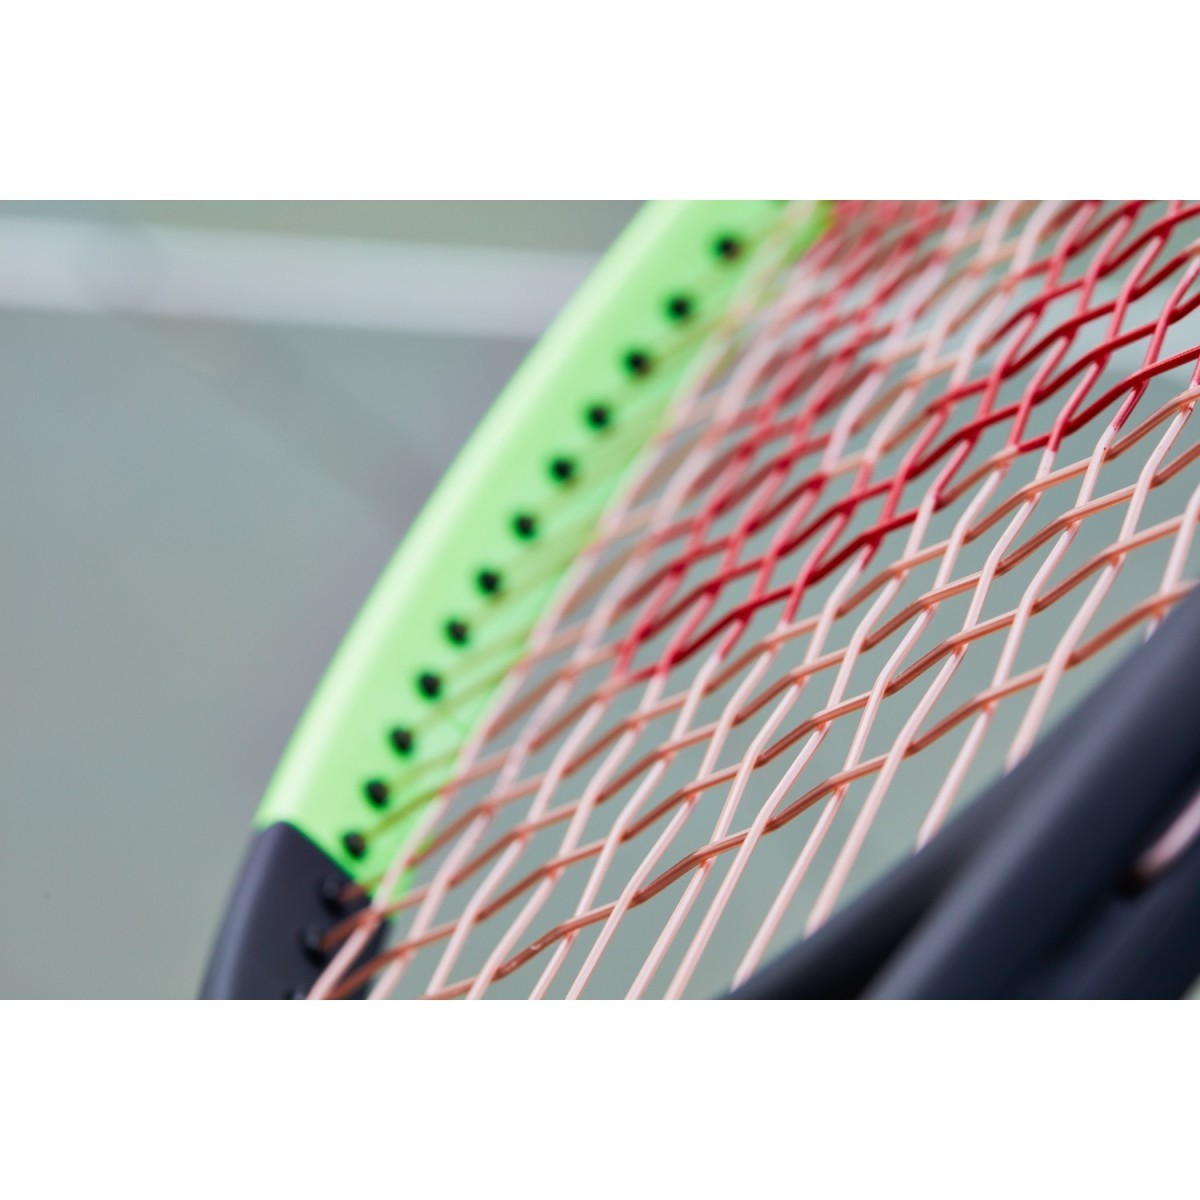 Wilson Luxilon Element Tennis String 125 Set - atr-sports